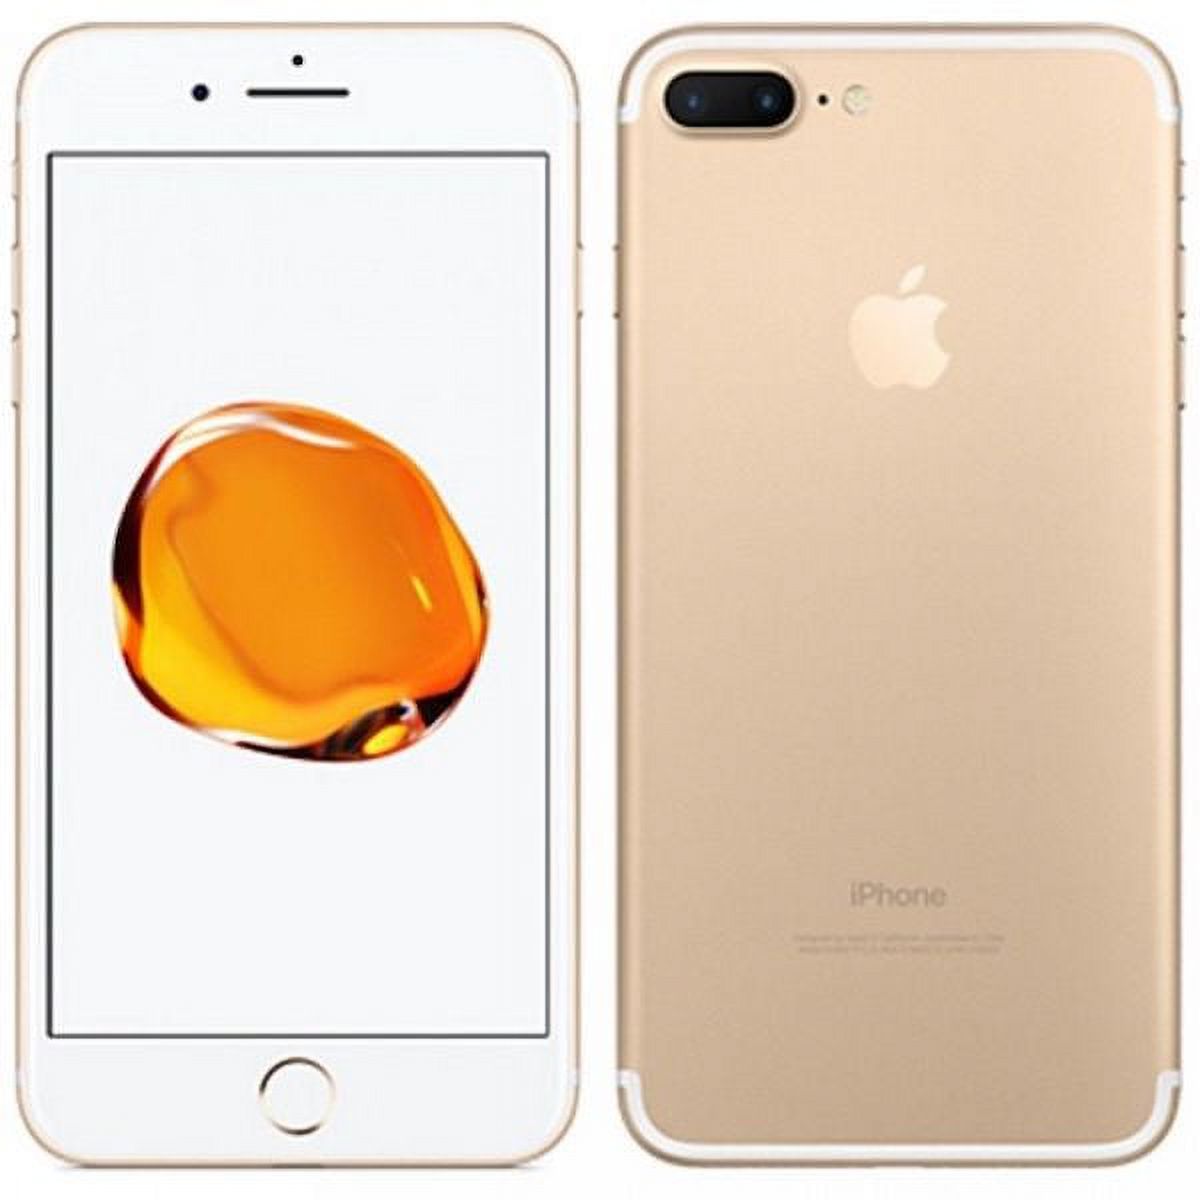 Apple iPhone 7 Plus 128GB Gold - image 2 of 4